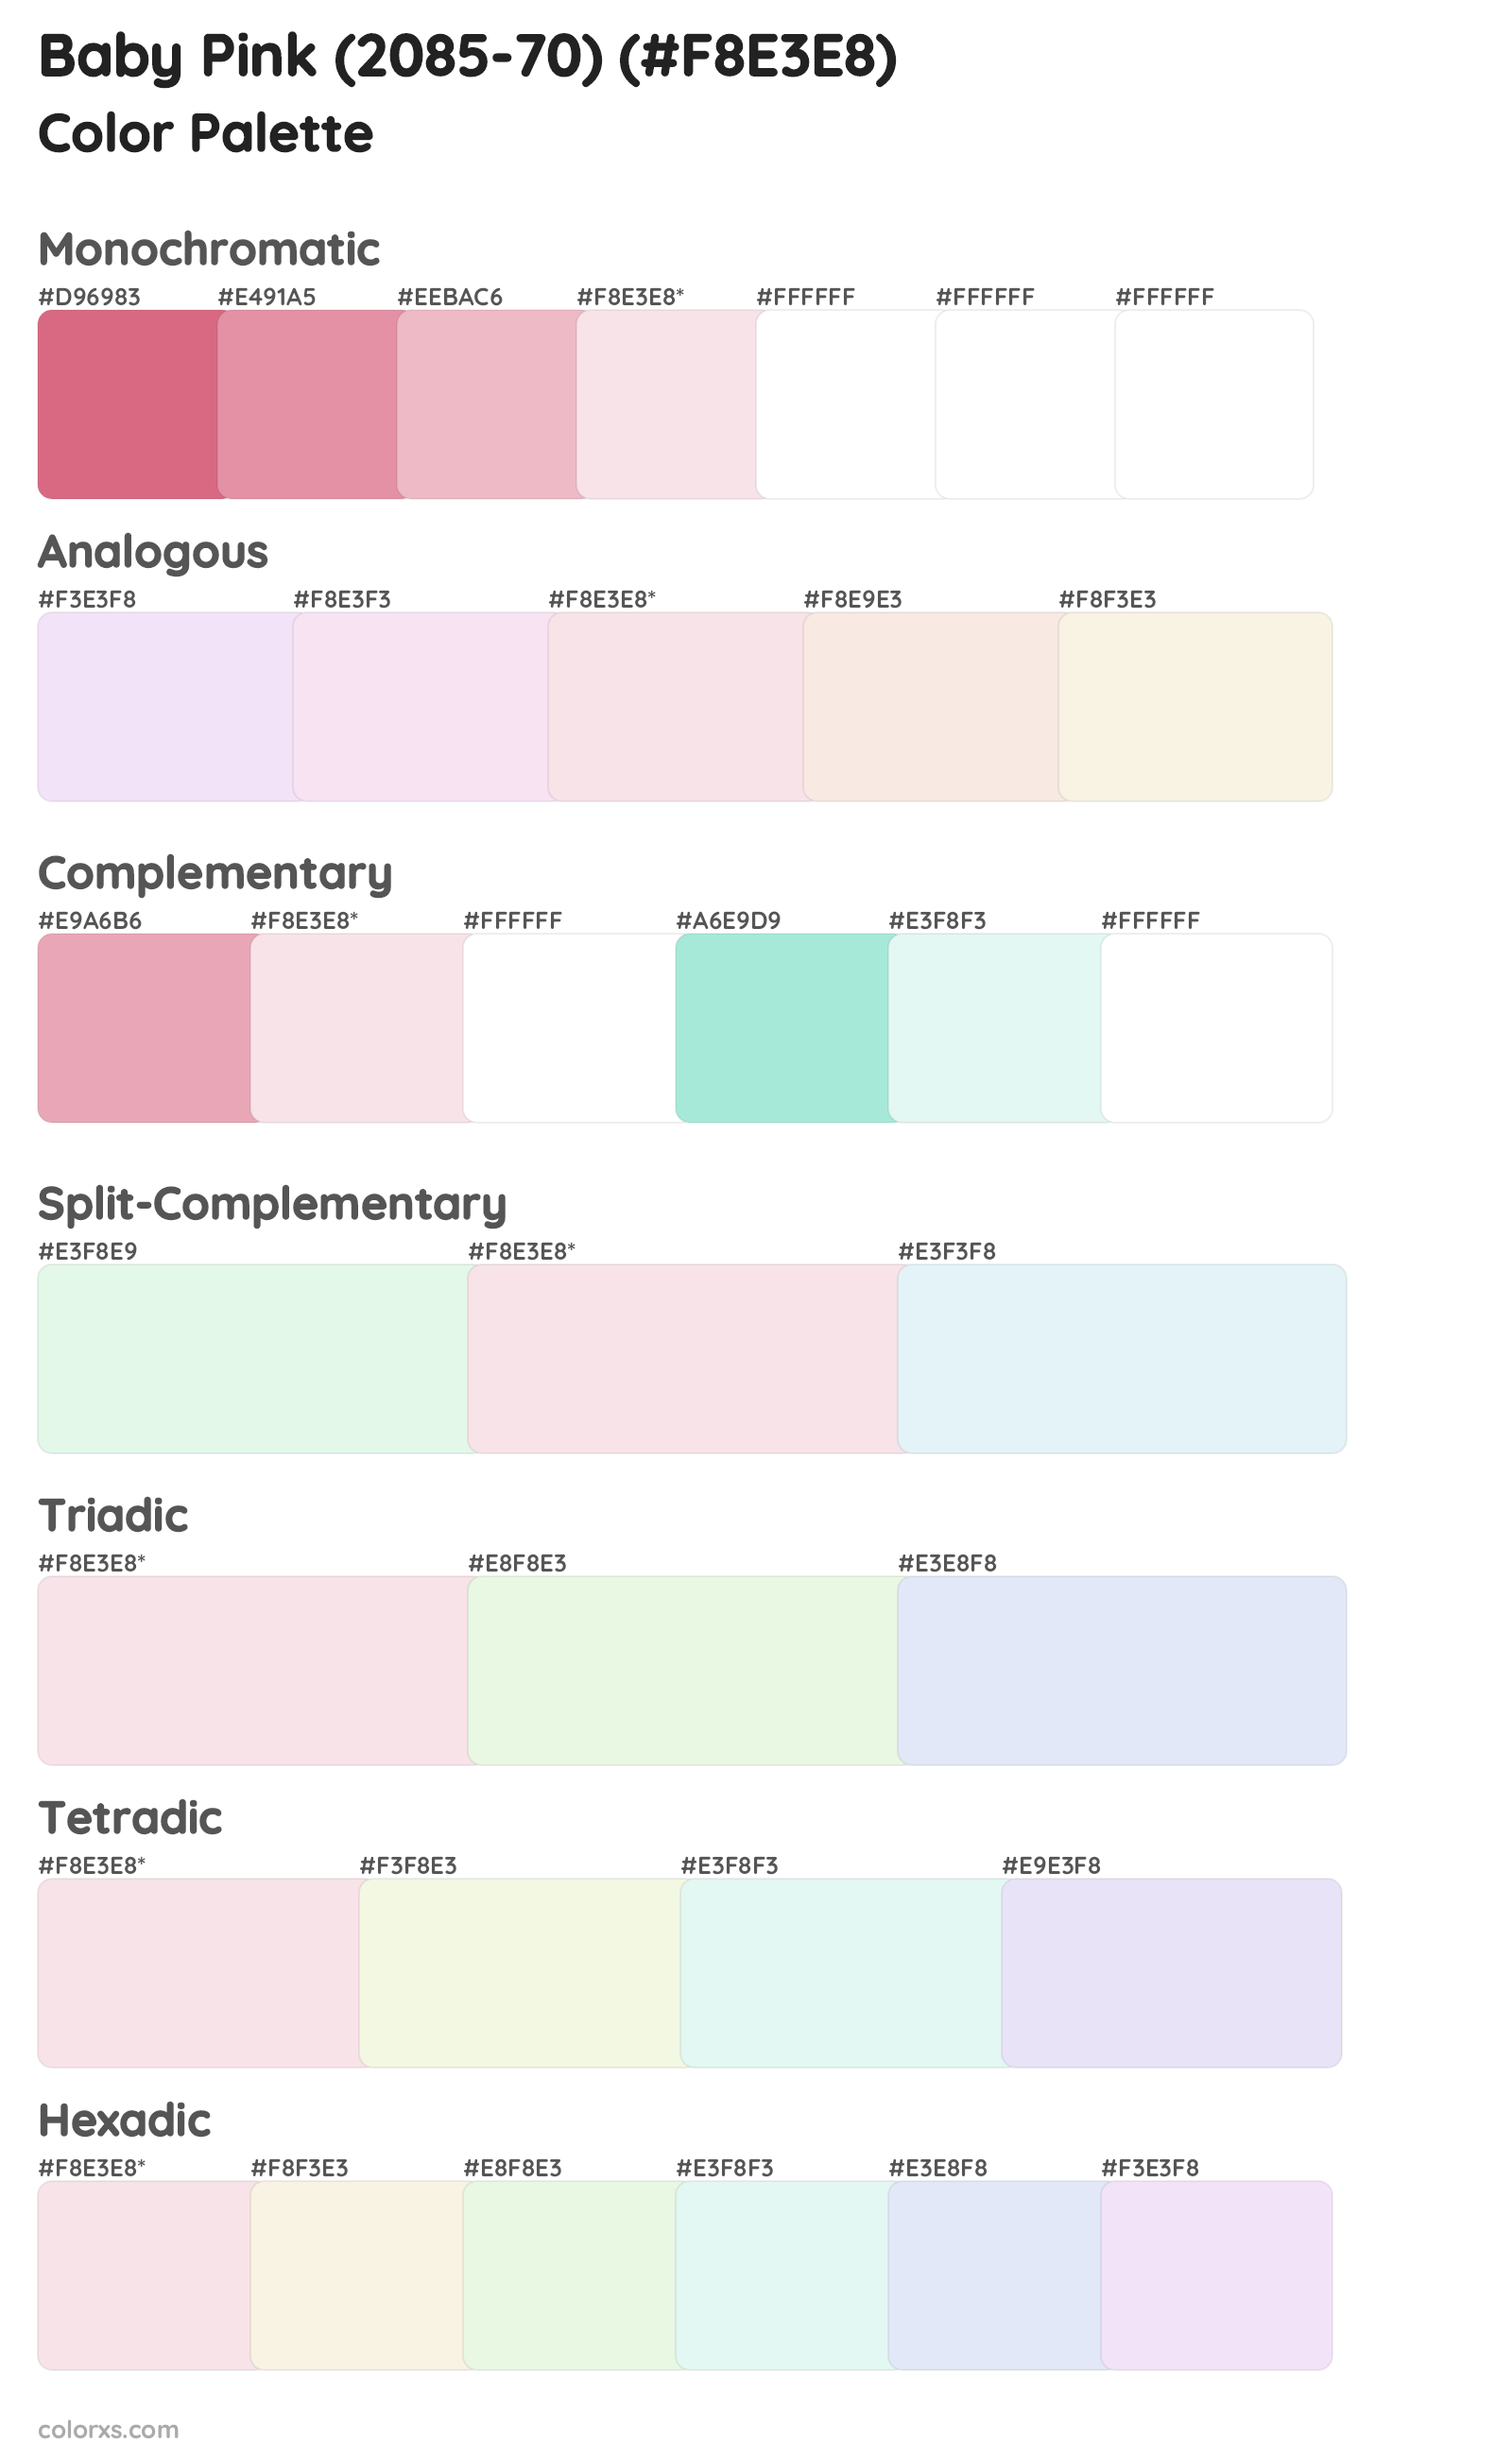 Baby Pink (2085-70) Color Scheme Palettes